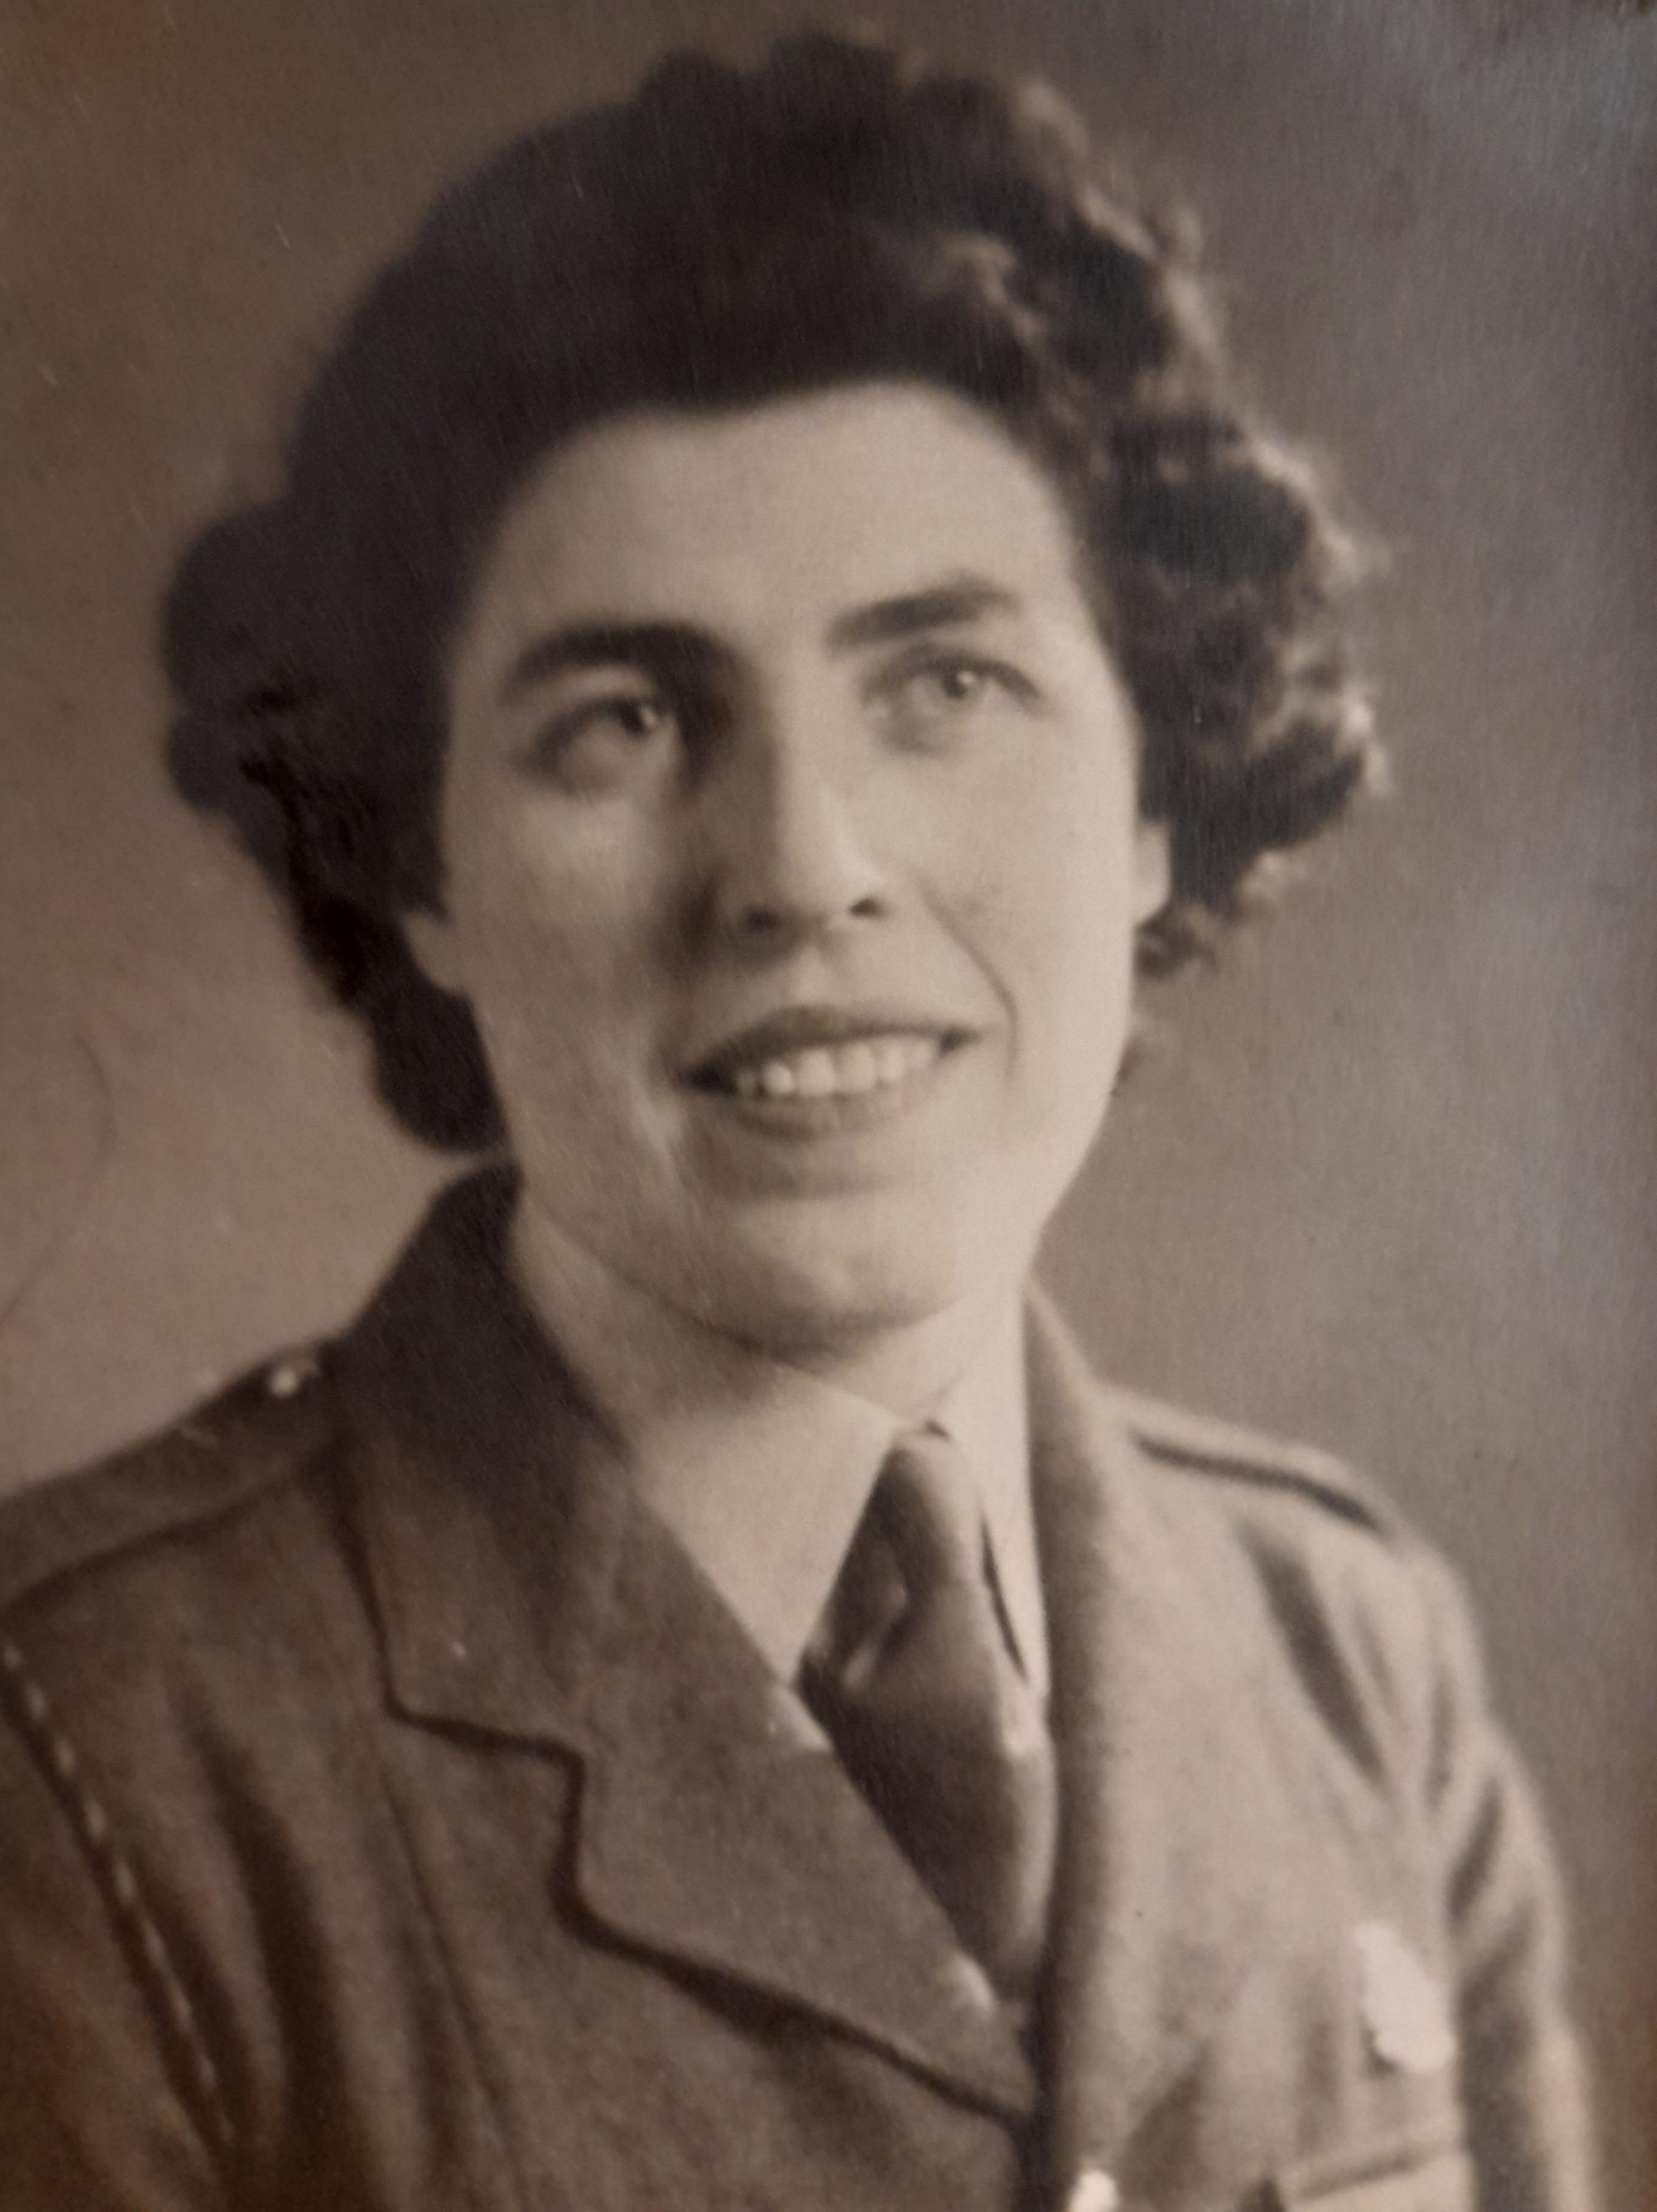 Scot Helen Jewitt was conscripted in 1942